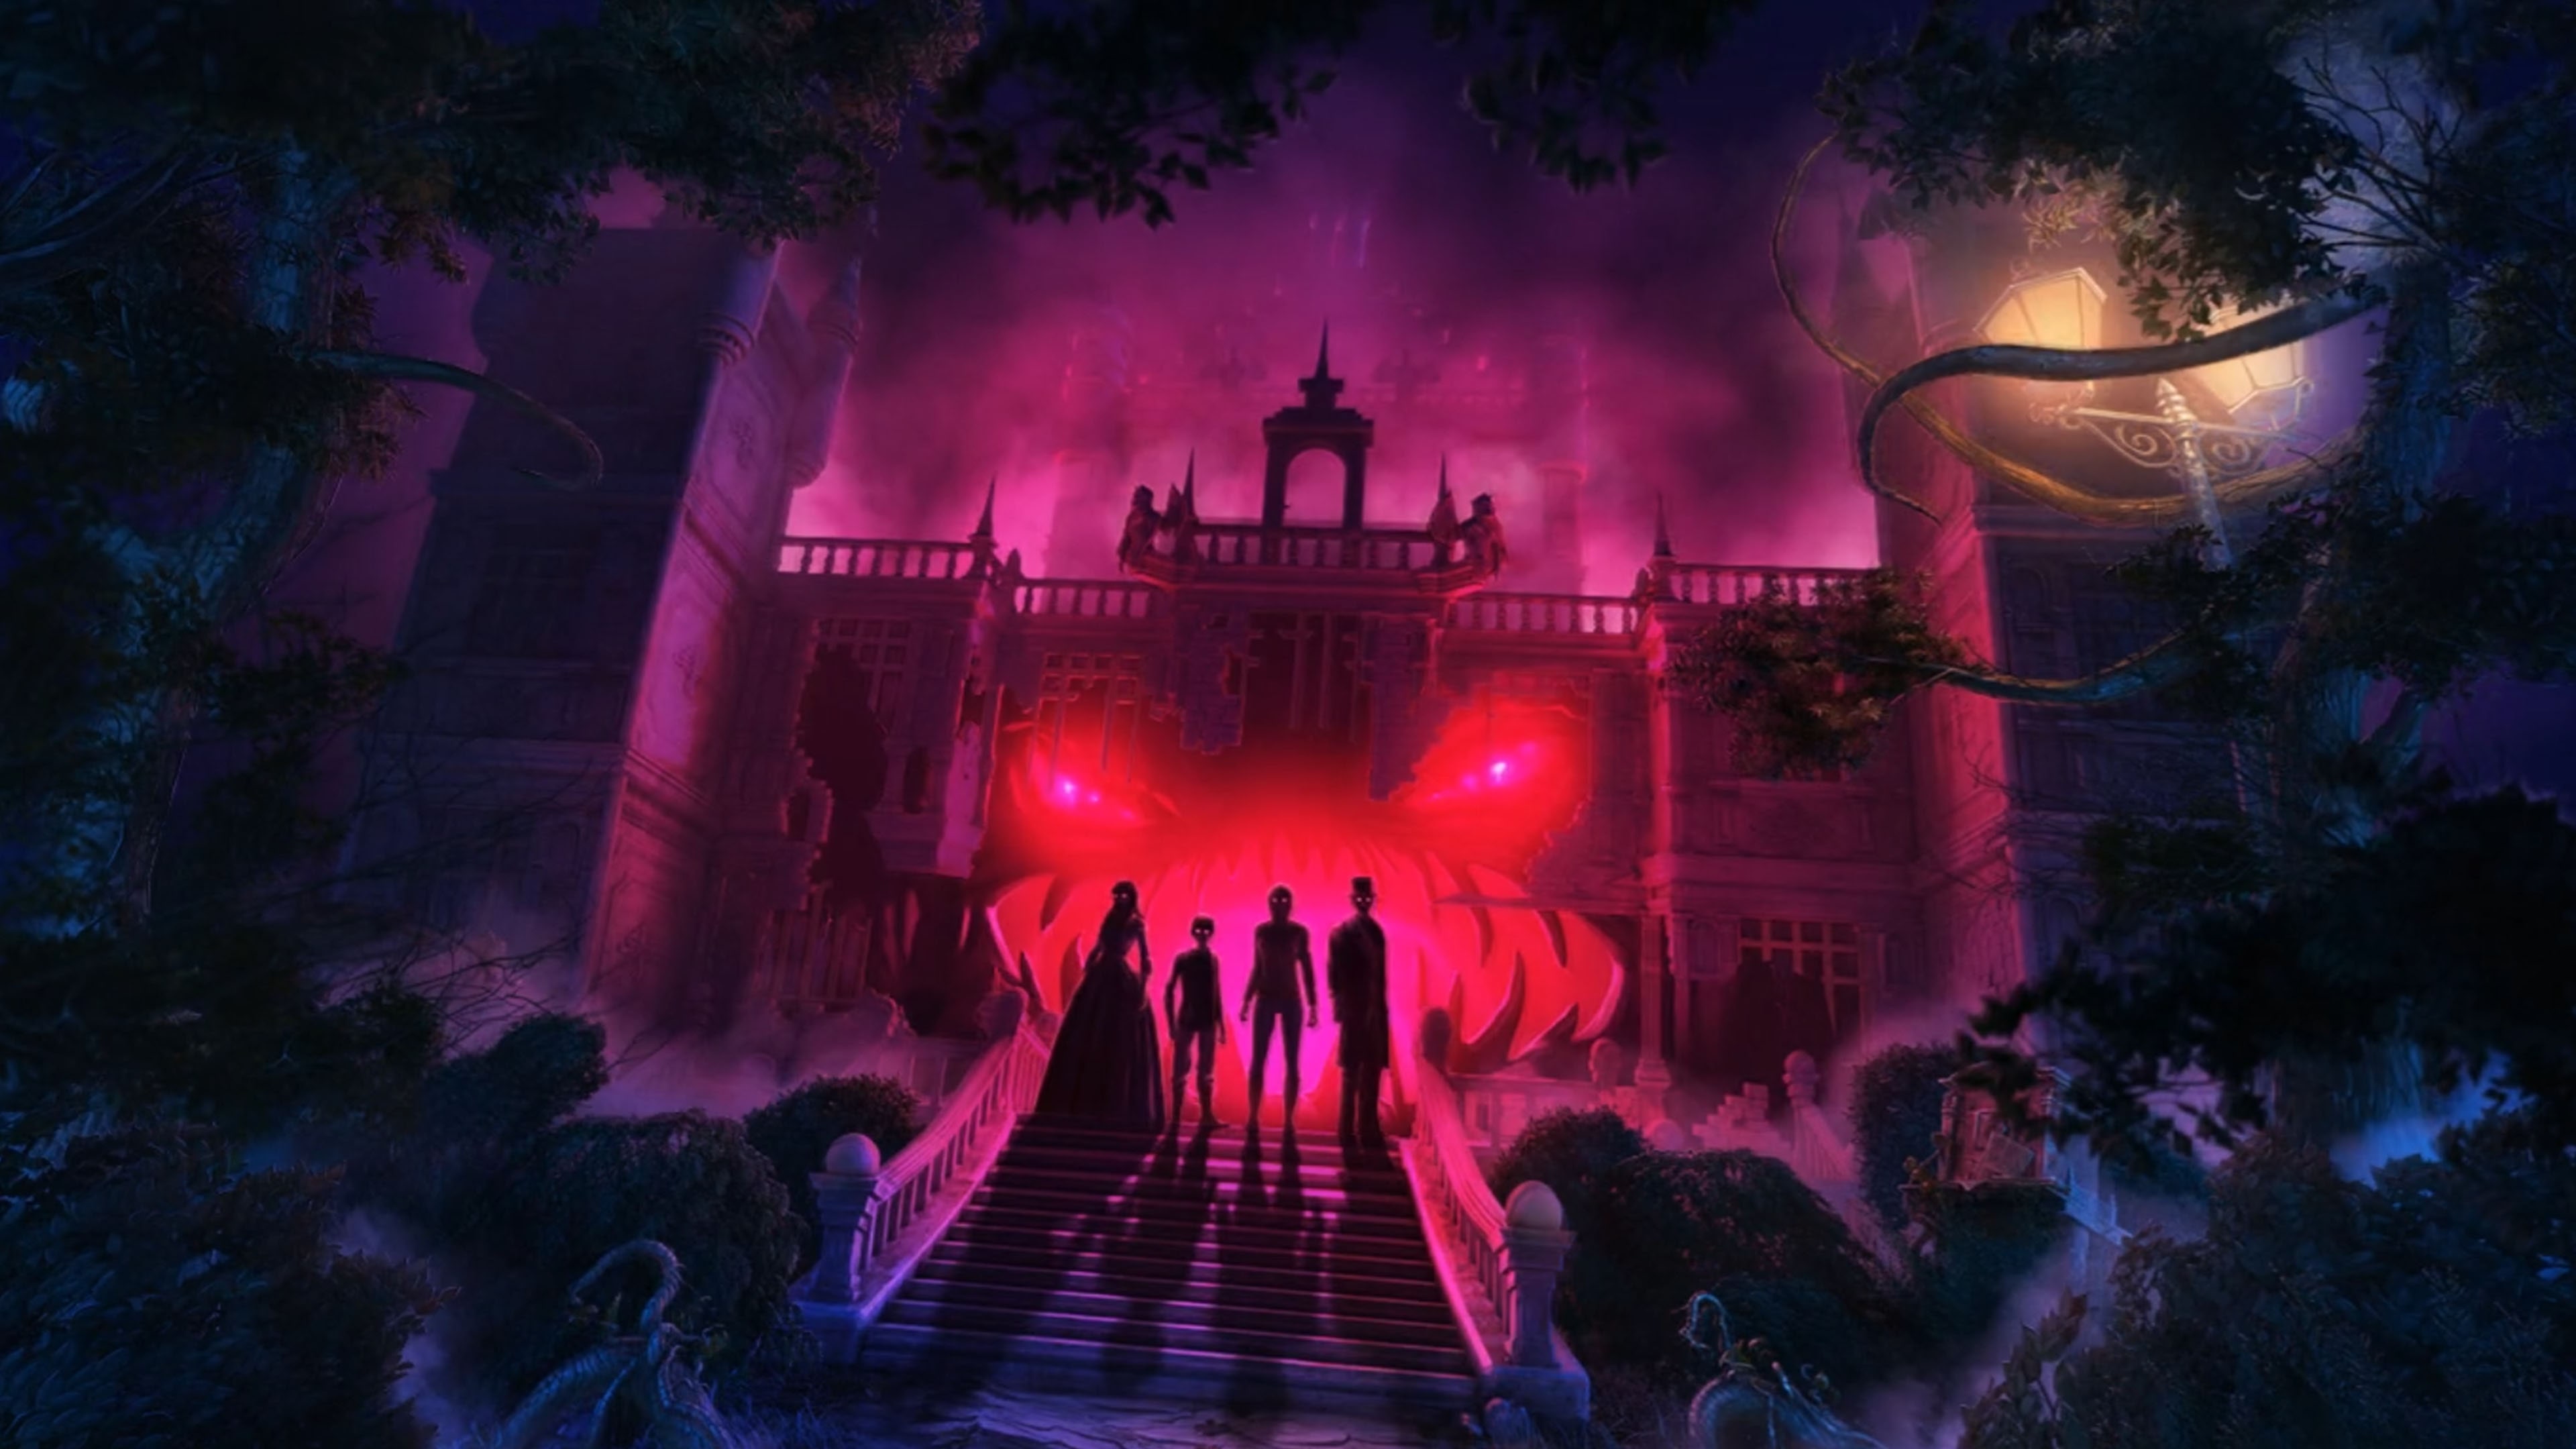 House of 1000 Doors: Evil Inside [Download]